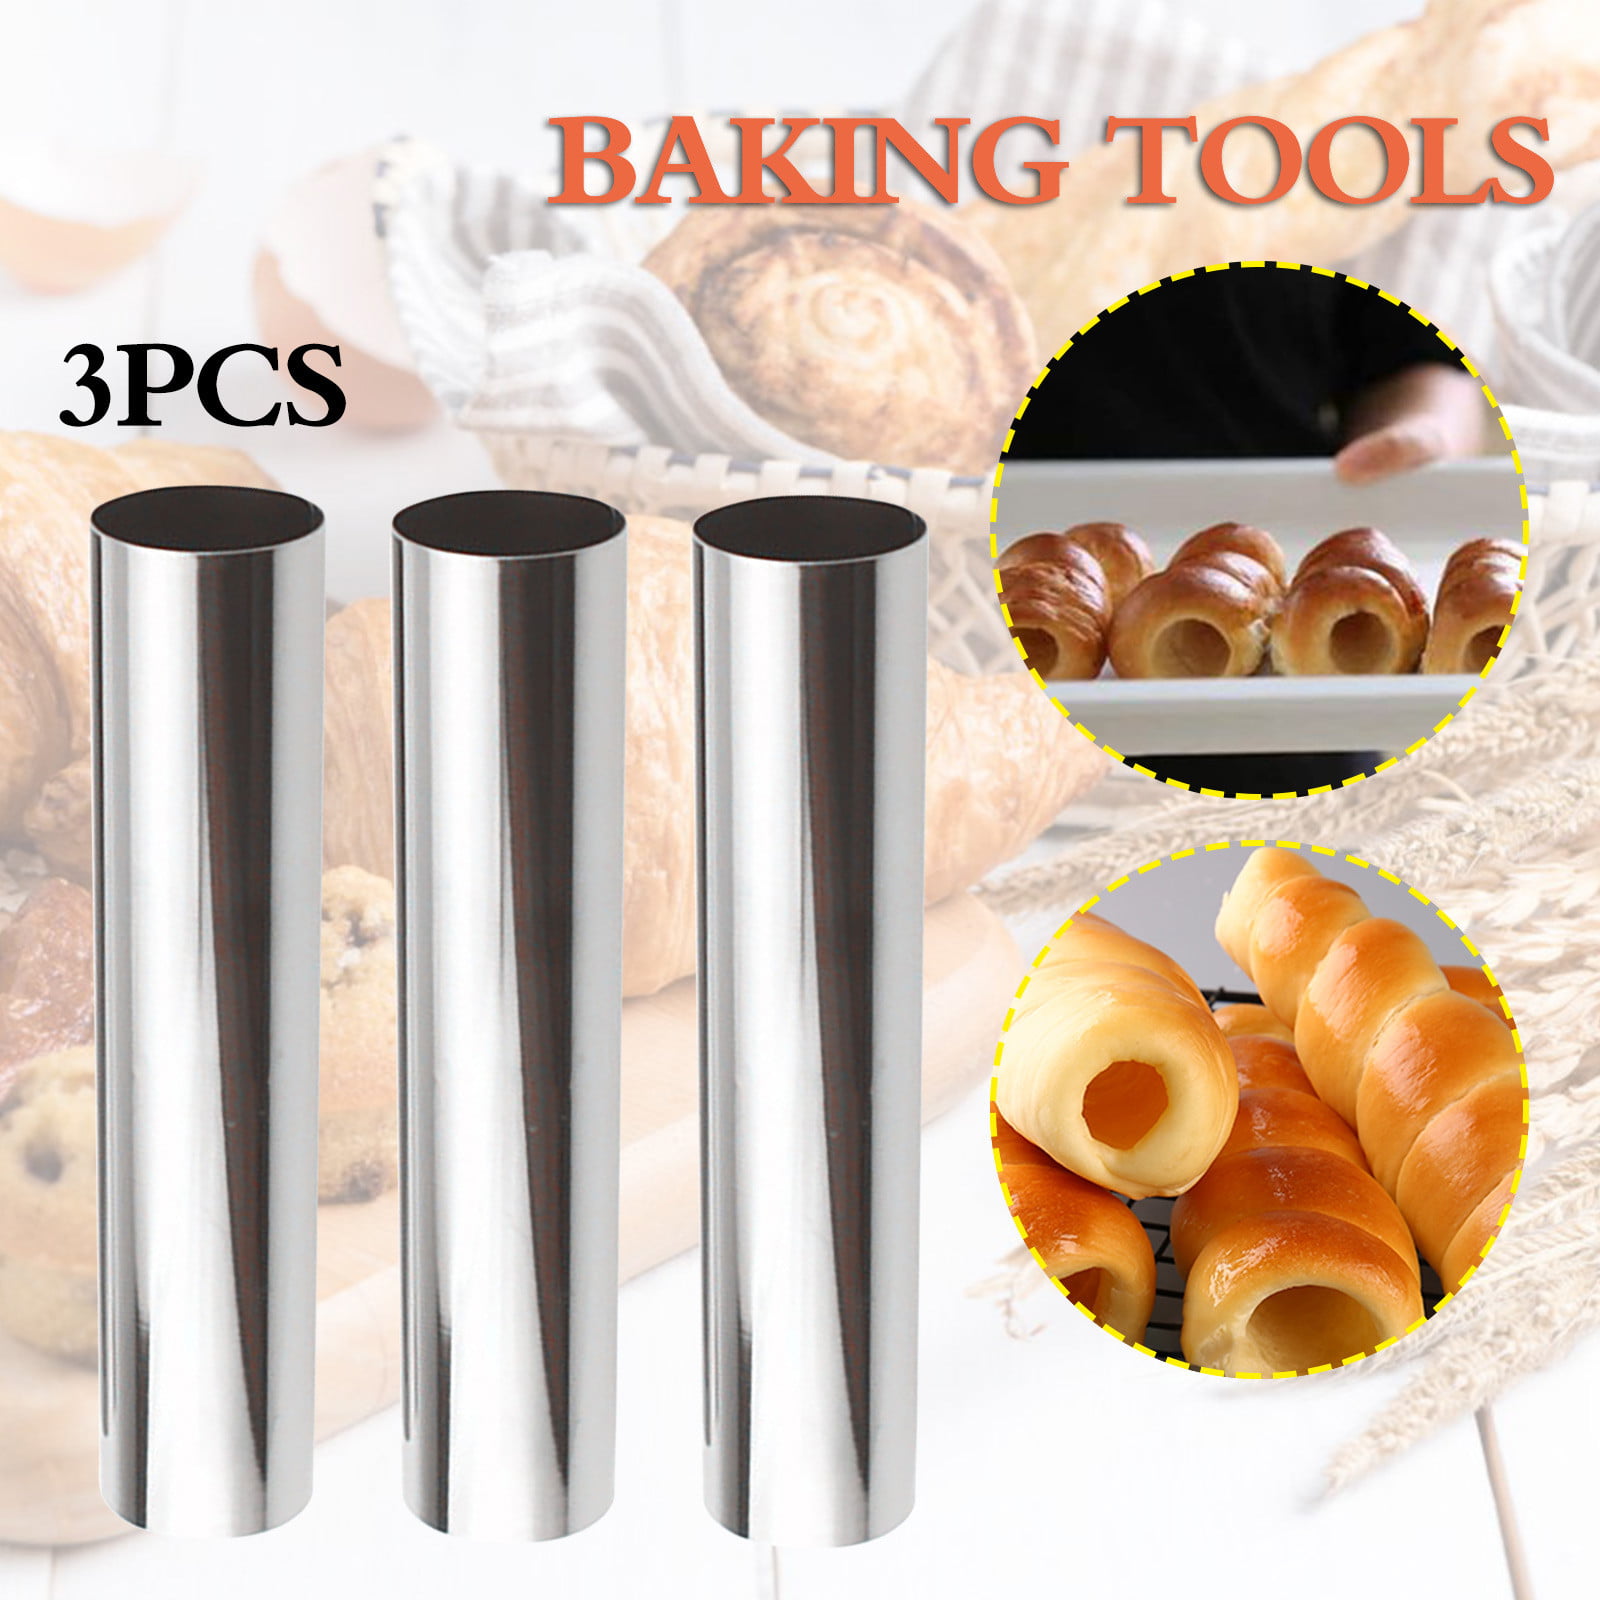 3Pcs DIY Croissants Spiral Baked Tools Horn Mold Baking Cake 